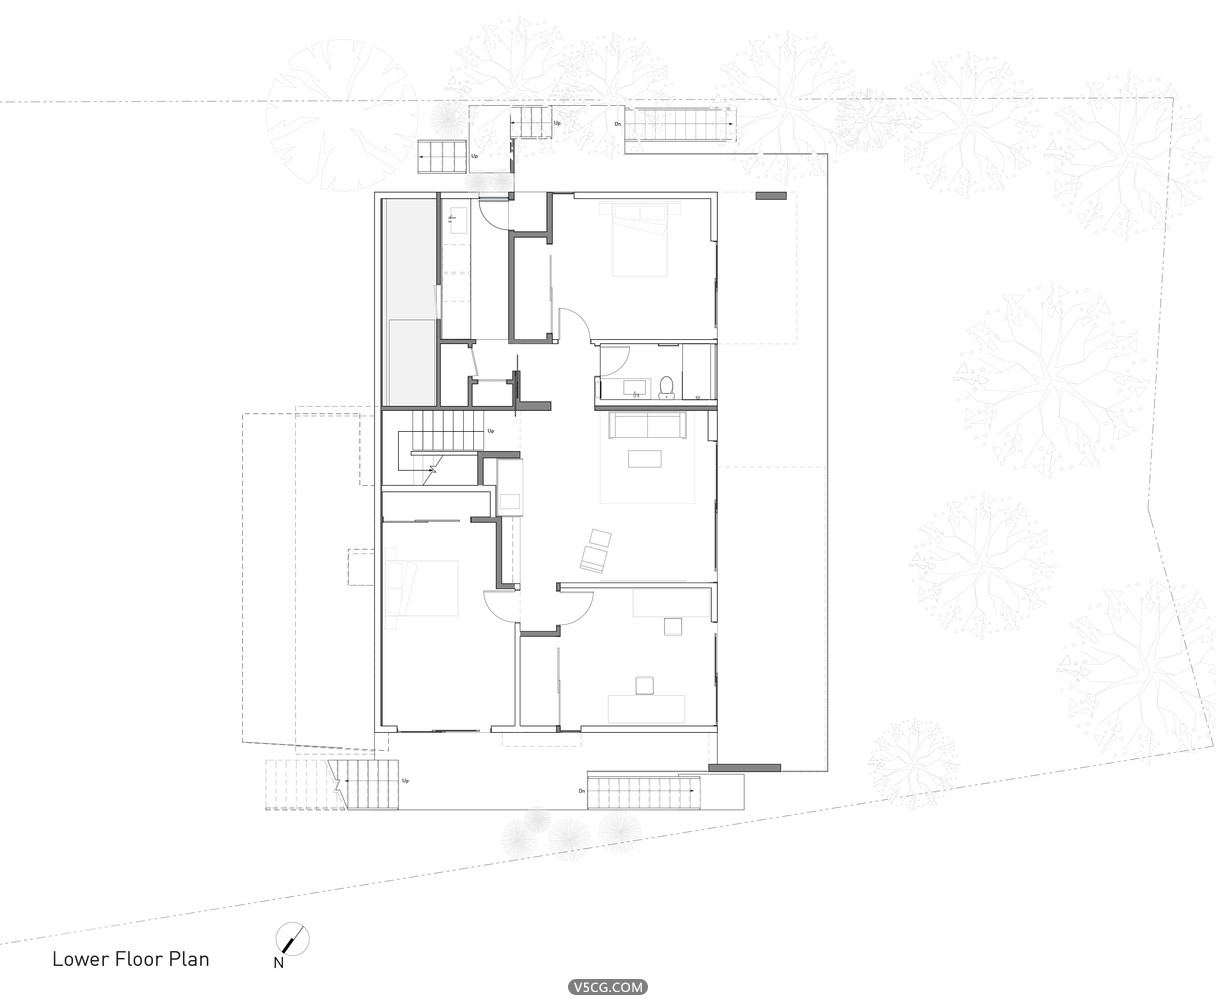 Skyline_House-_Lower_Floor_Plan3.jpg